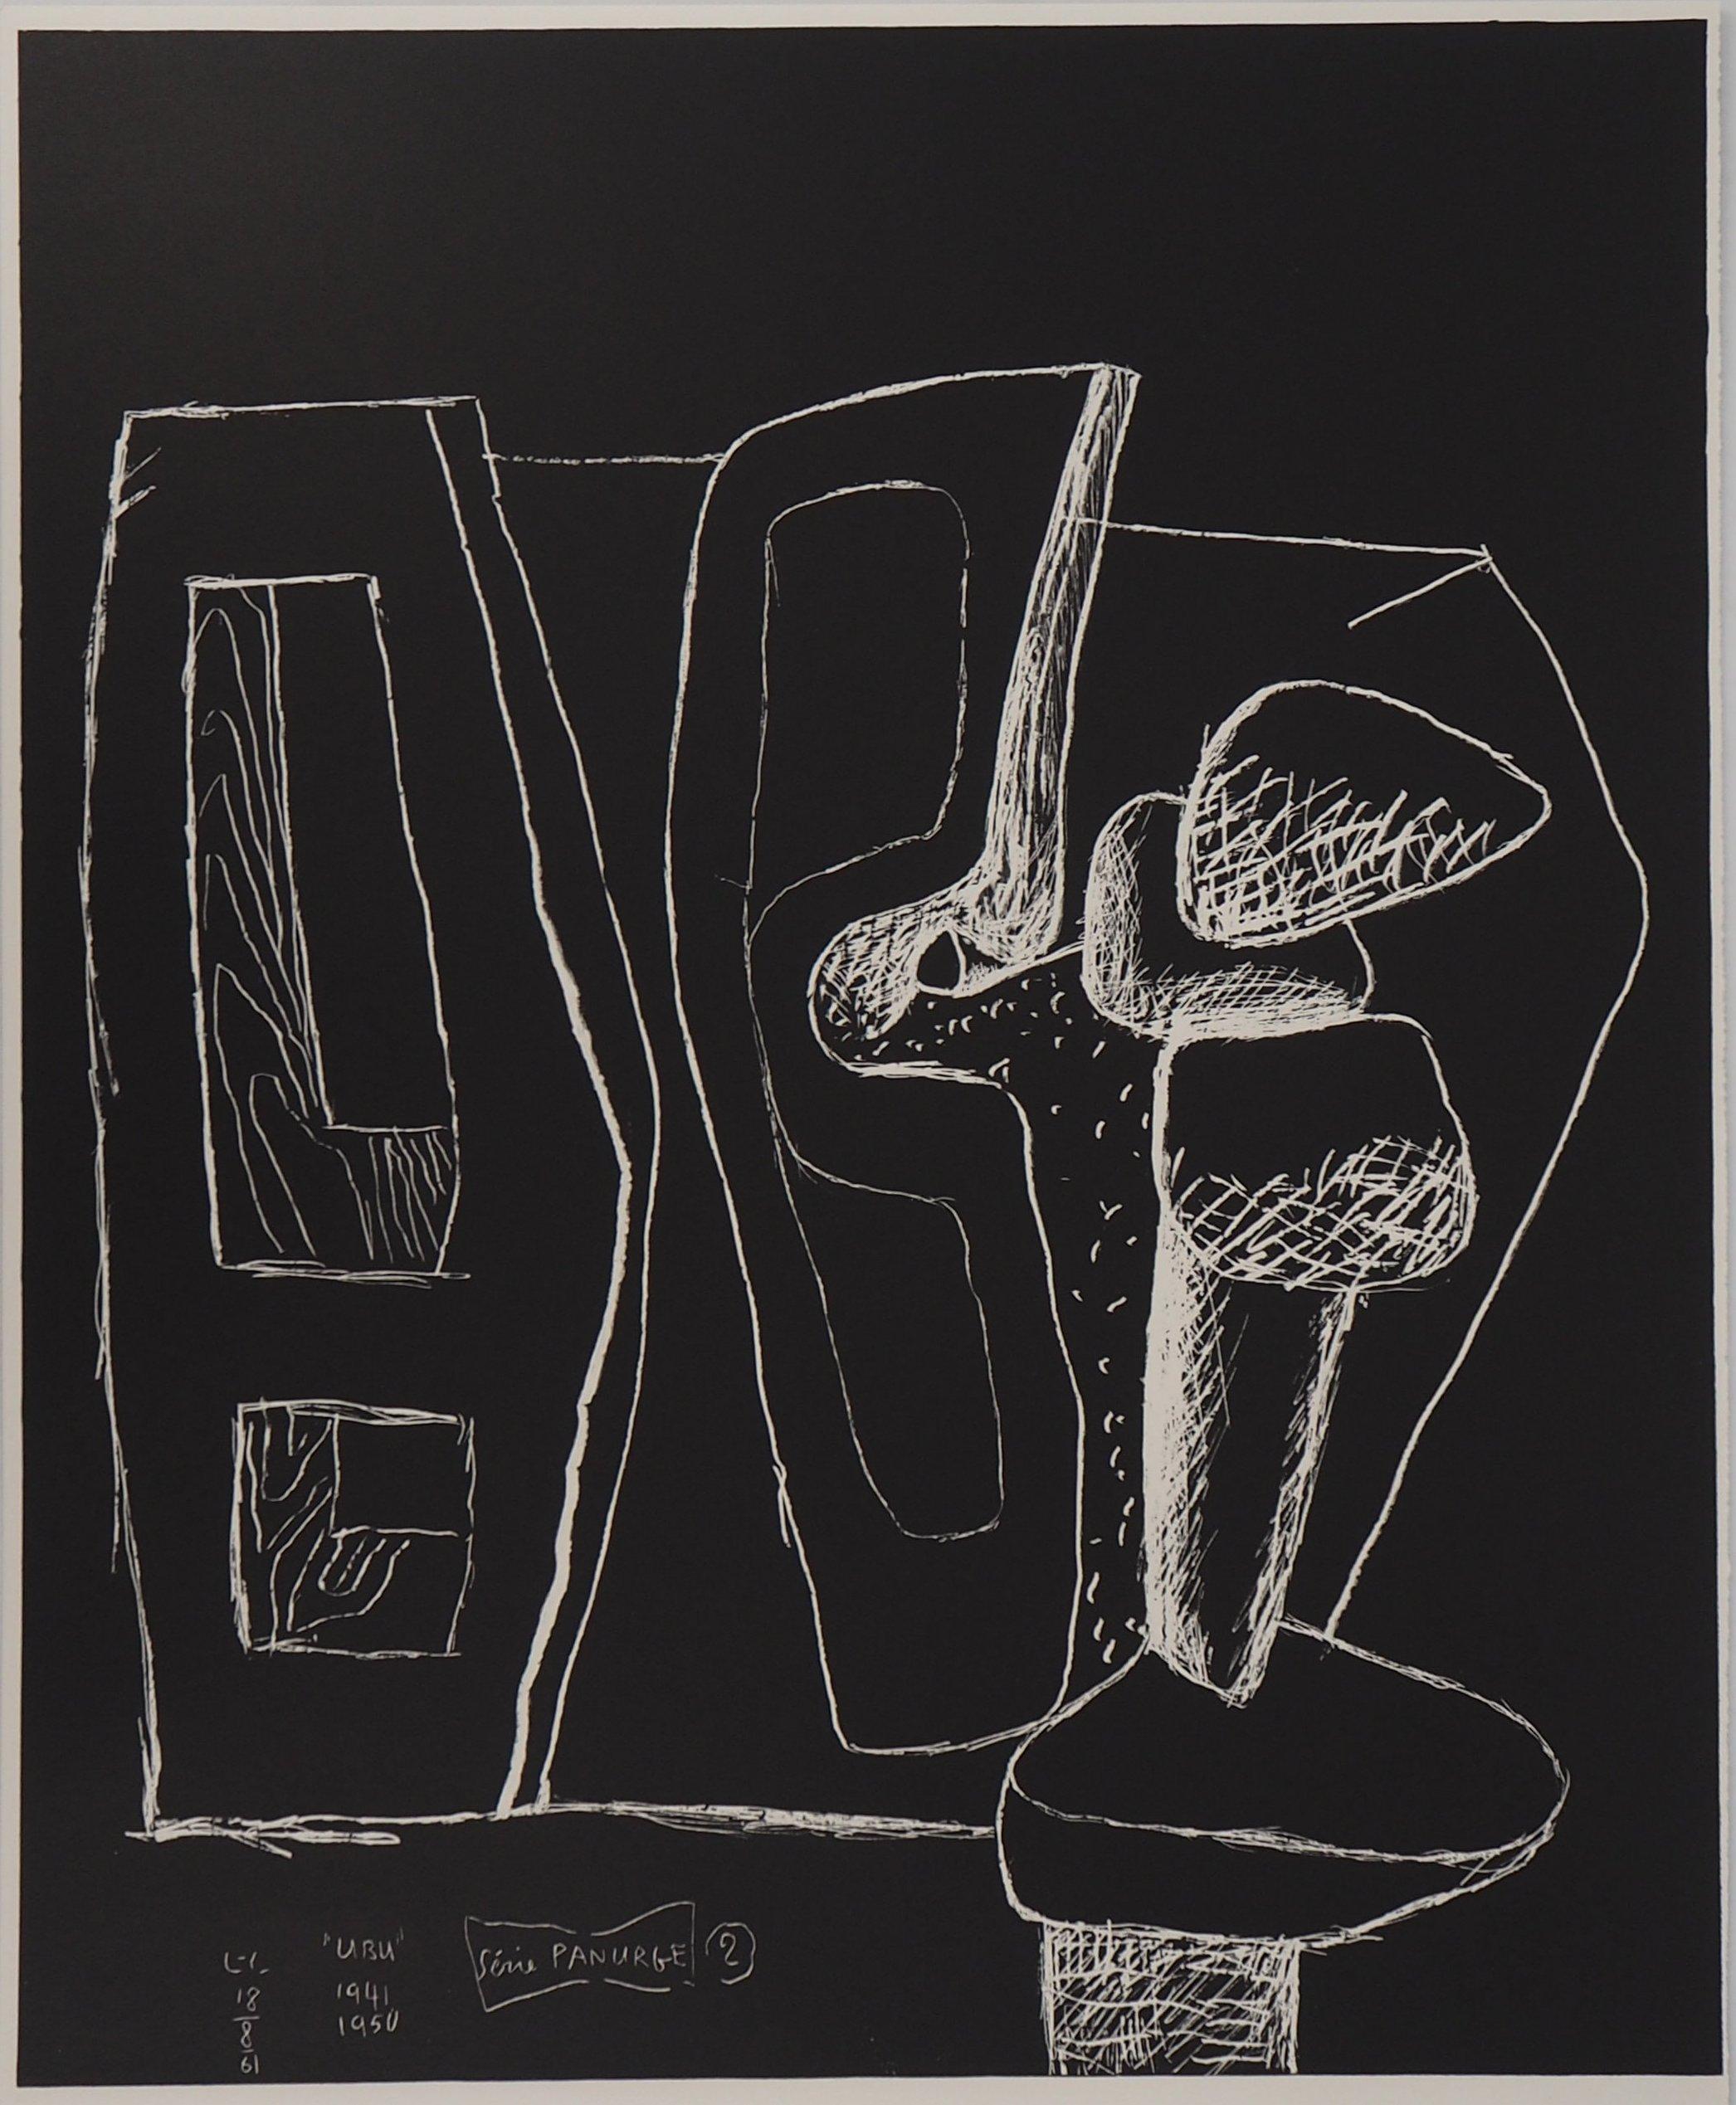 Le Corbusier Abstract Print - Ubu and Panurge - Original Lithograph (Mourlot)